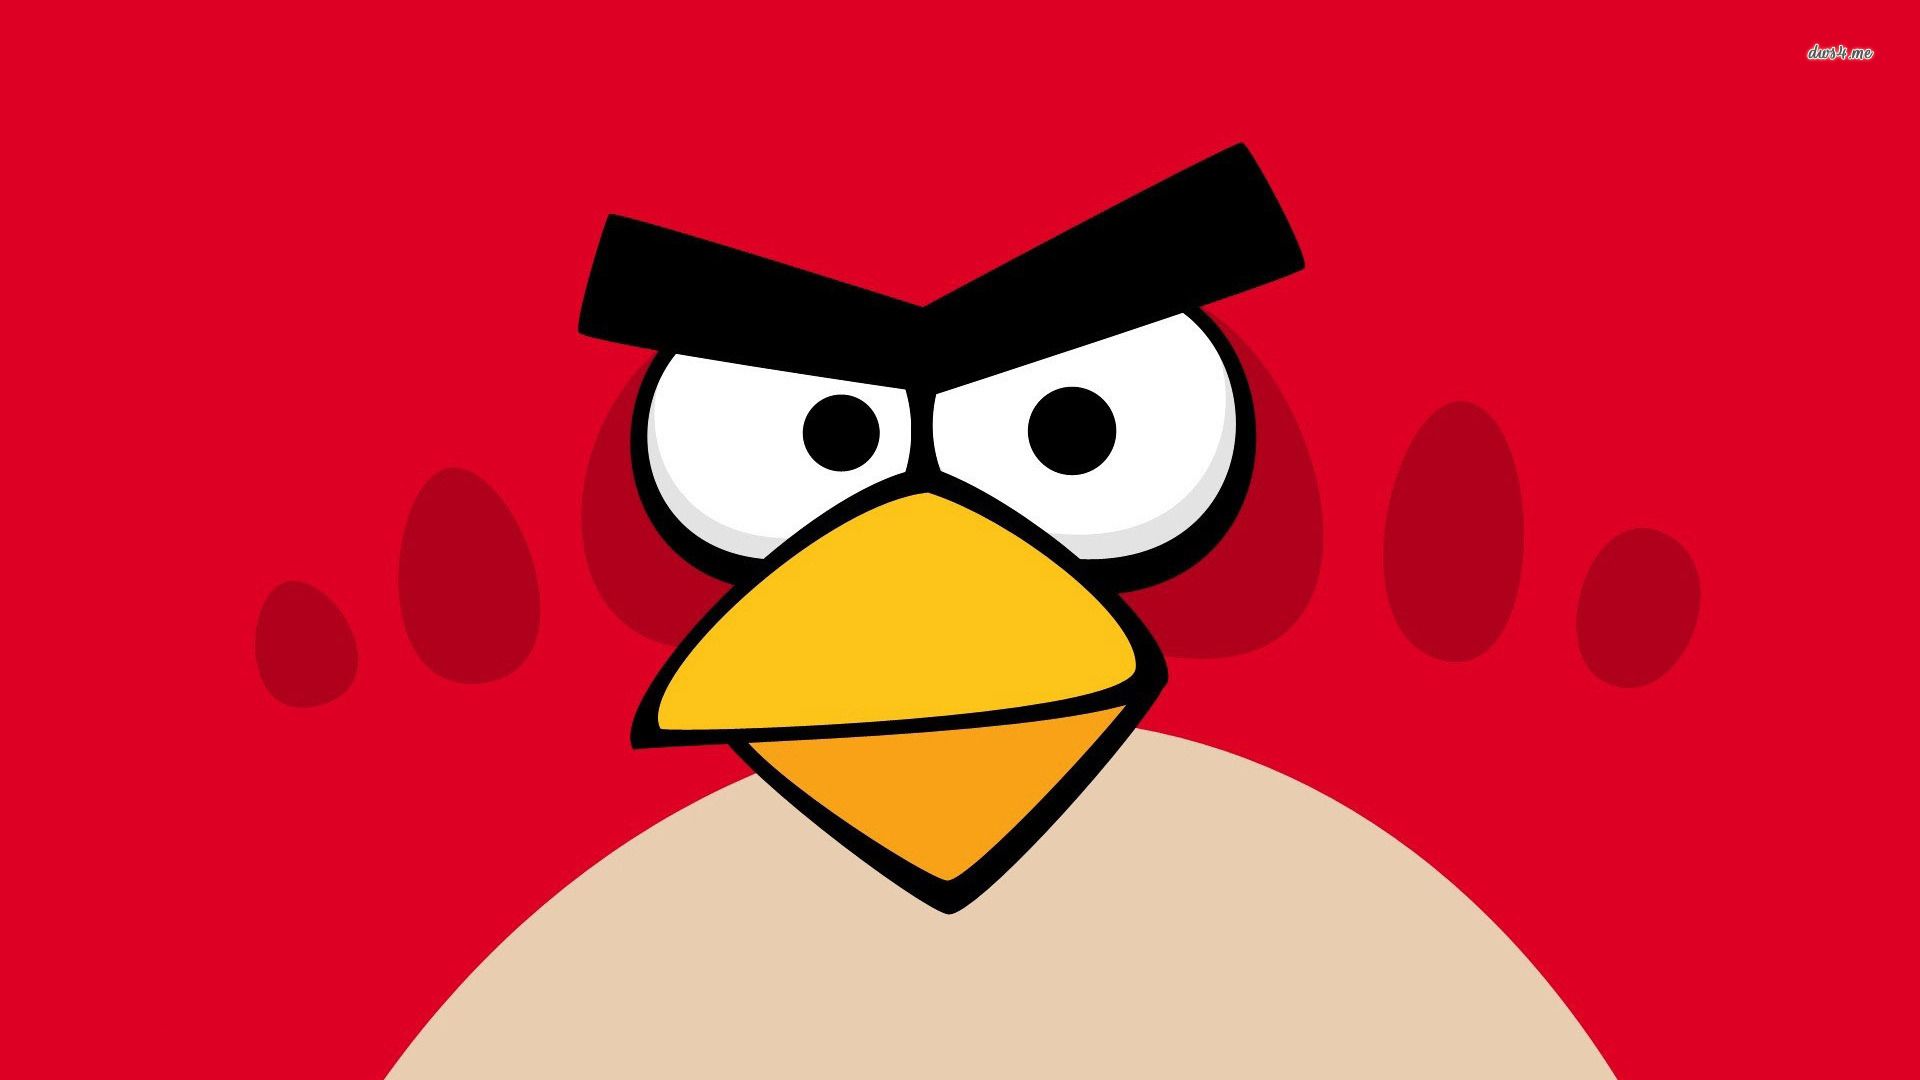 28 angry birds Wallpaper backgrounds - Desktop Wallpapers